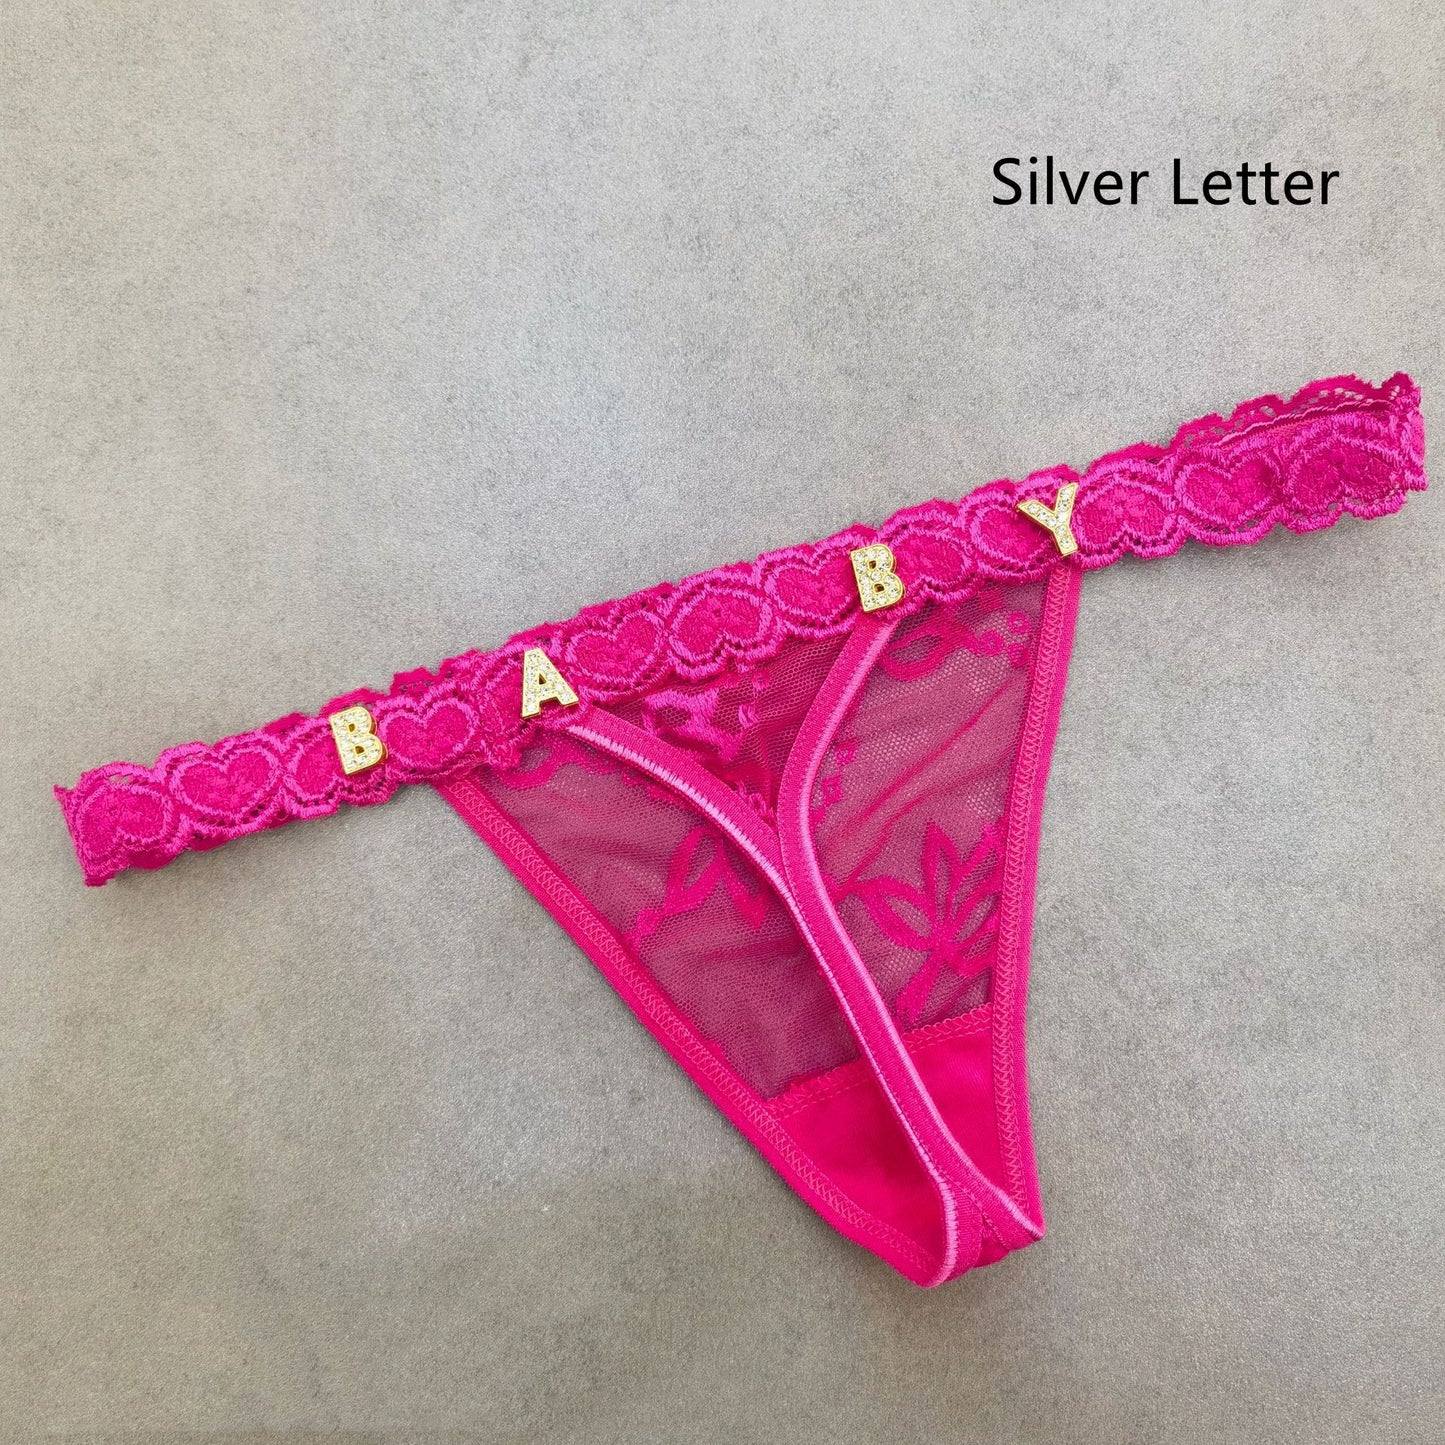 Indi Women's Customizable Lace Transparent Rhinestone Letter Underwear